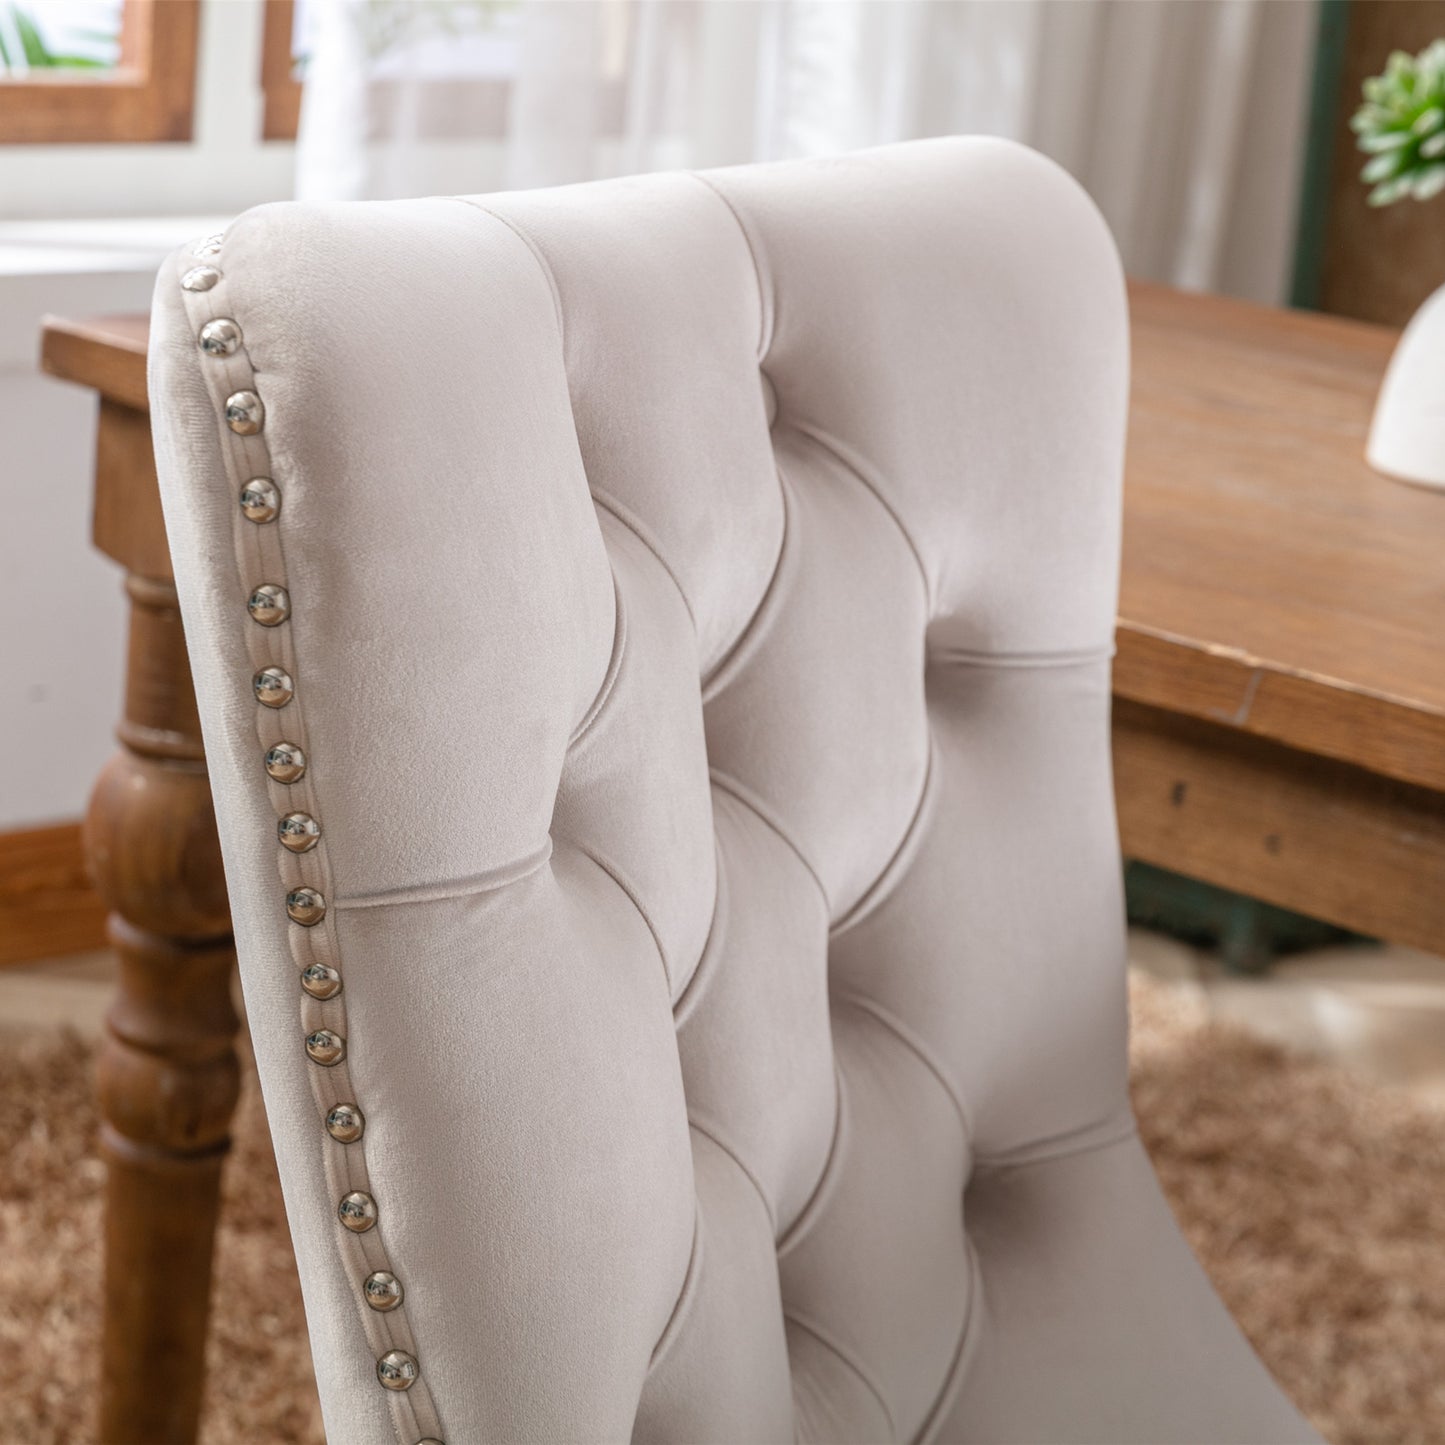 Nikki Collection ModernVelvet Upholstered Dining Chairs (Set of 2)